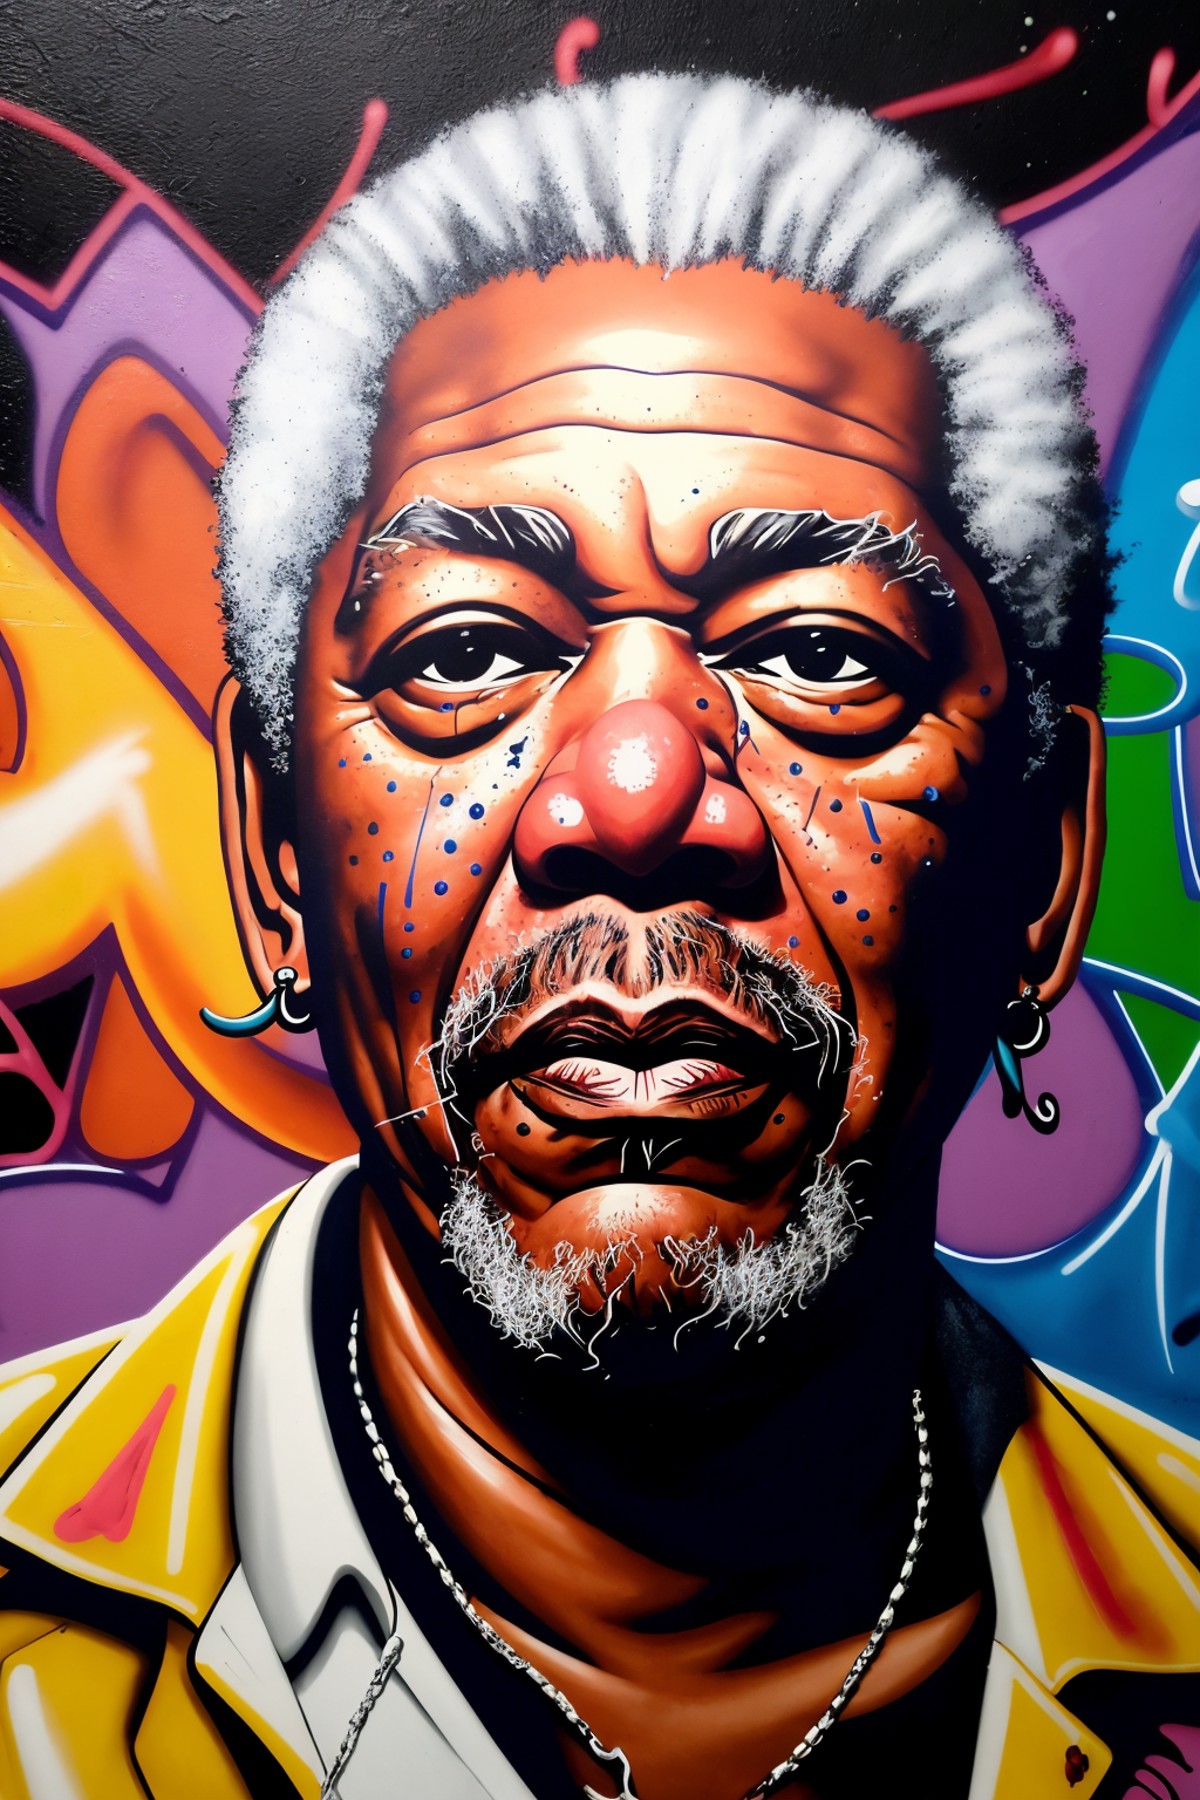 Tempting [Nervous:Signature:18] "Morgan Freeman from his best angle", ultrafine detailed, Proud, Graffiti Street Art, F/2....